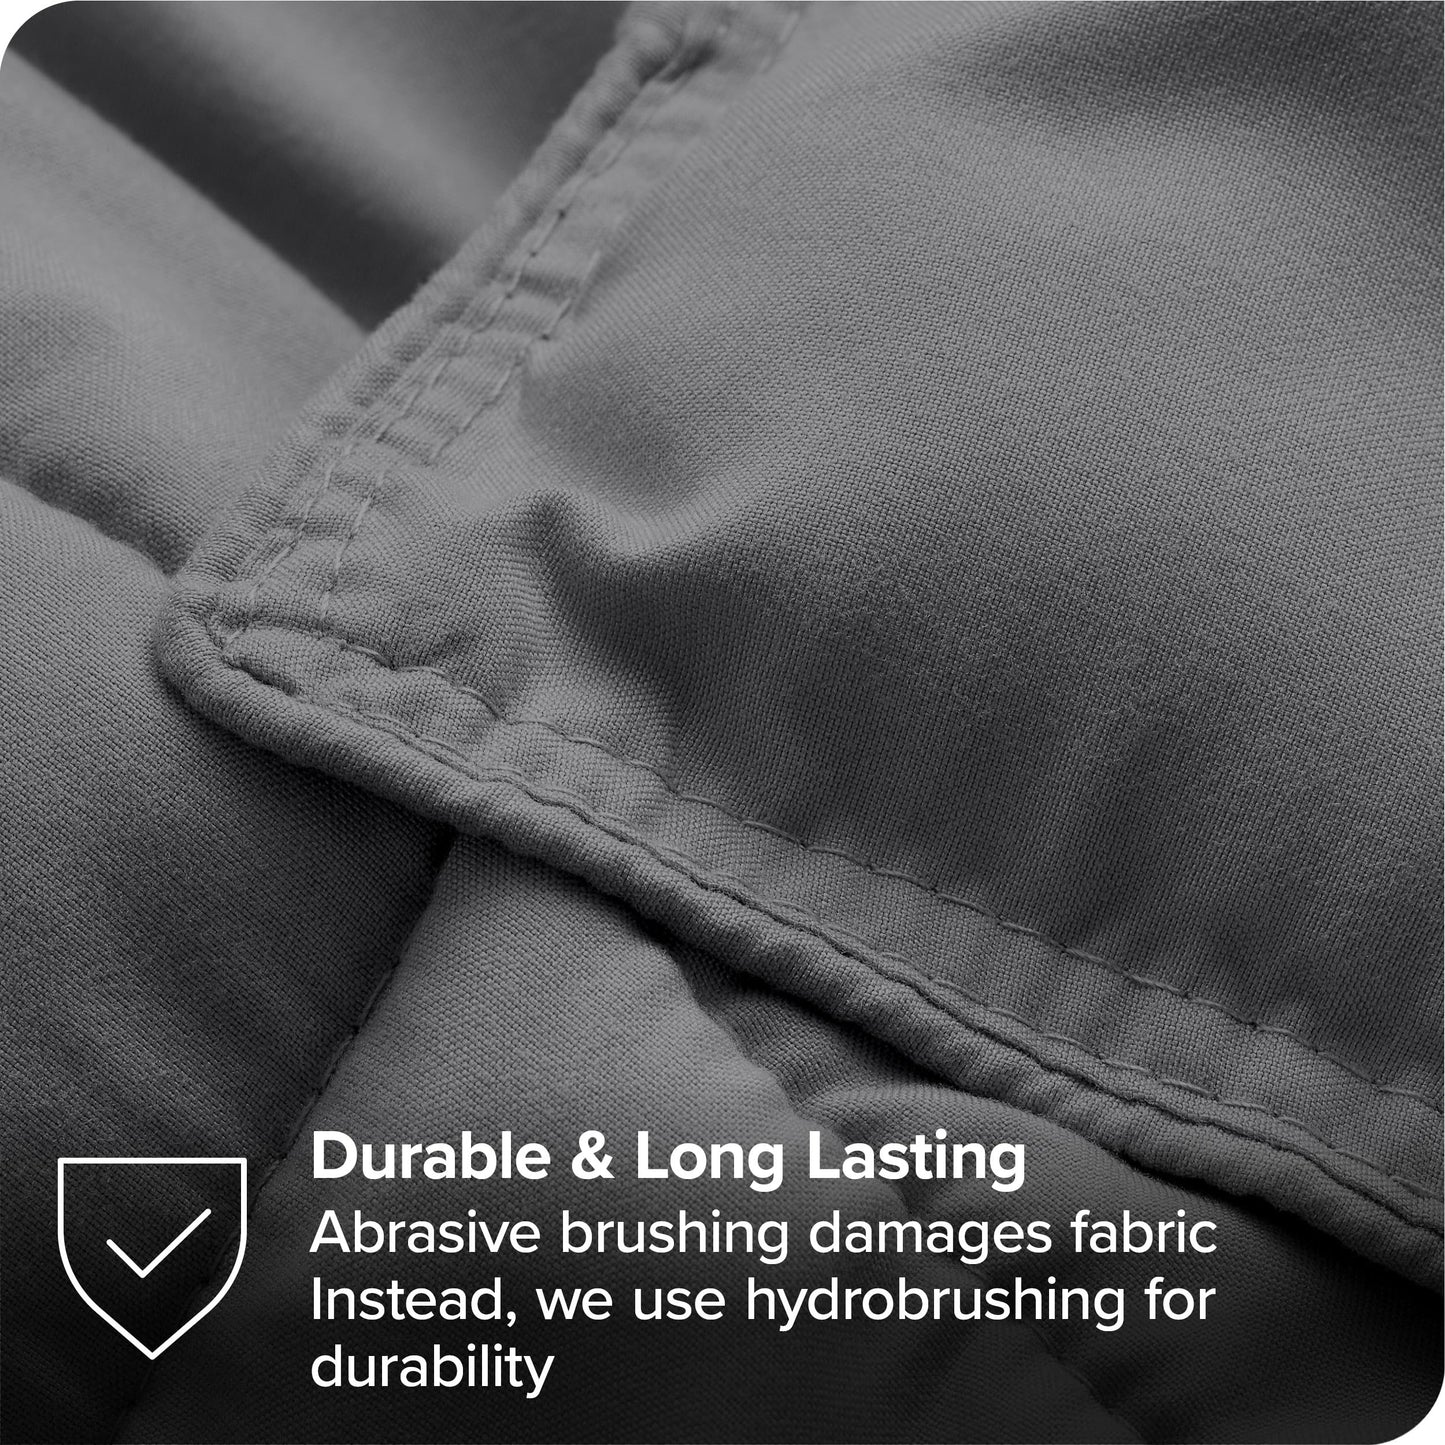 Bare Home Bed-in-A-Bag 7 Piece Comforter & Sheet Set - Queen - Goose Down Alternative - Ultra-Soft 1800 Premium Bedding Set (Queen, Grey/Light Grey)